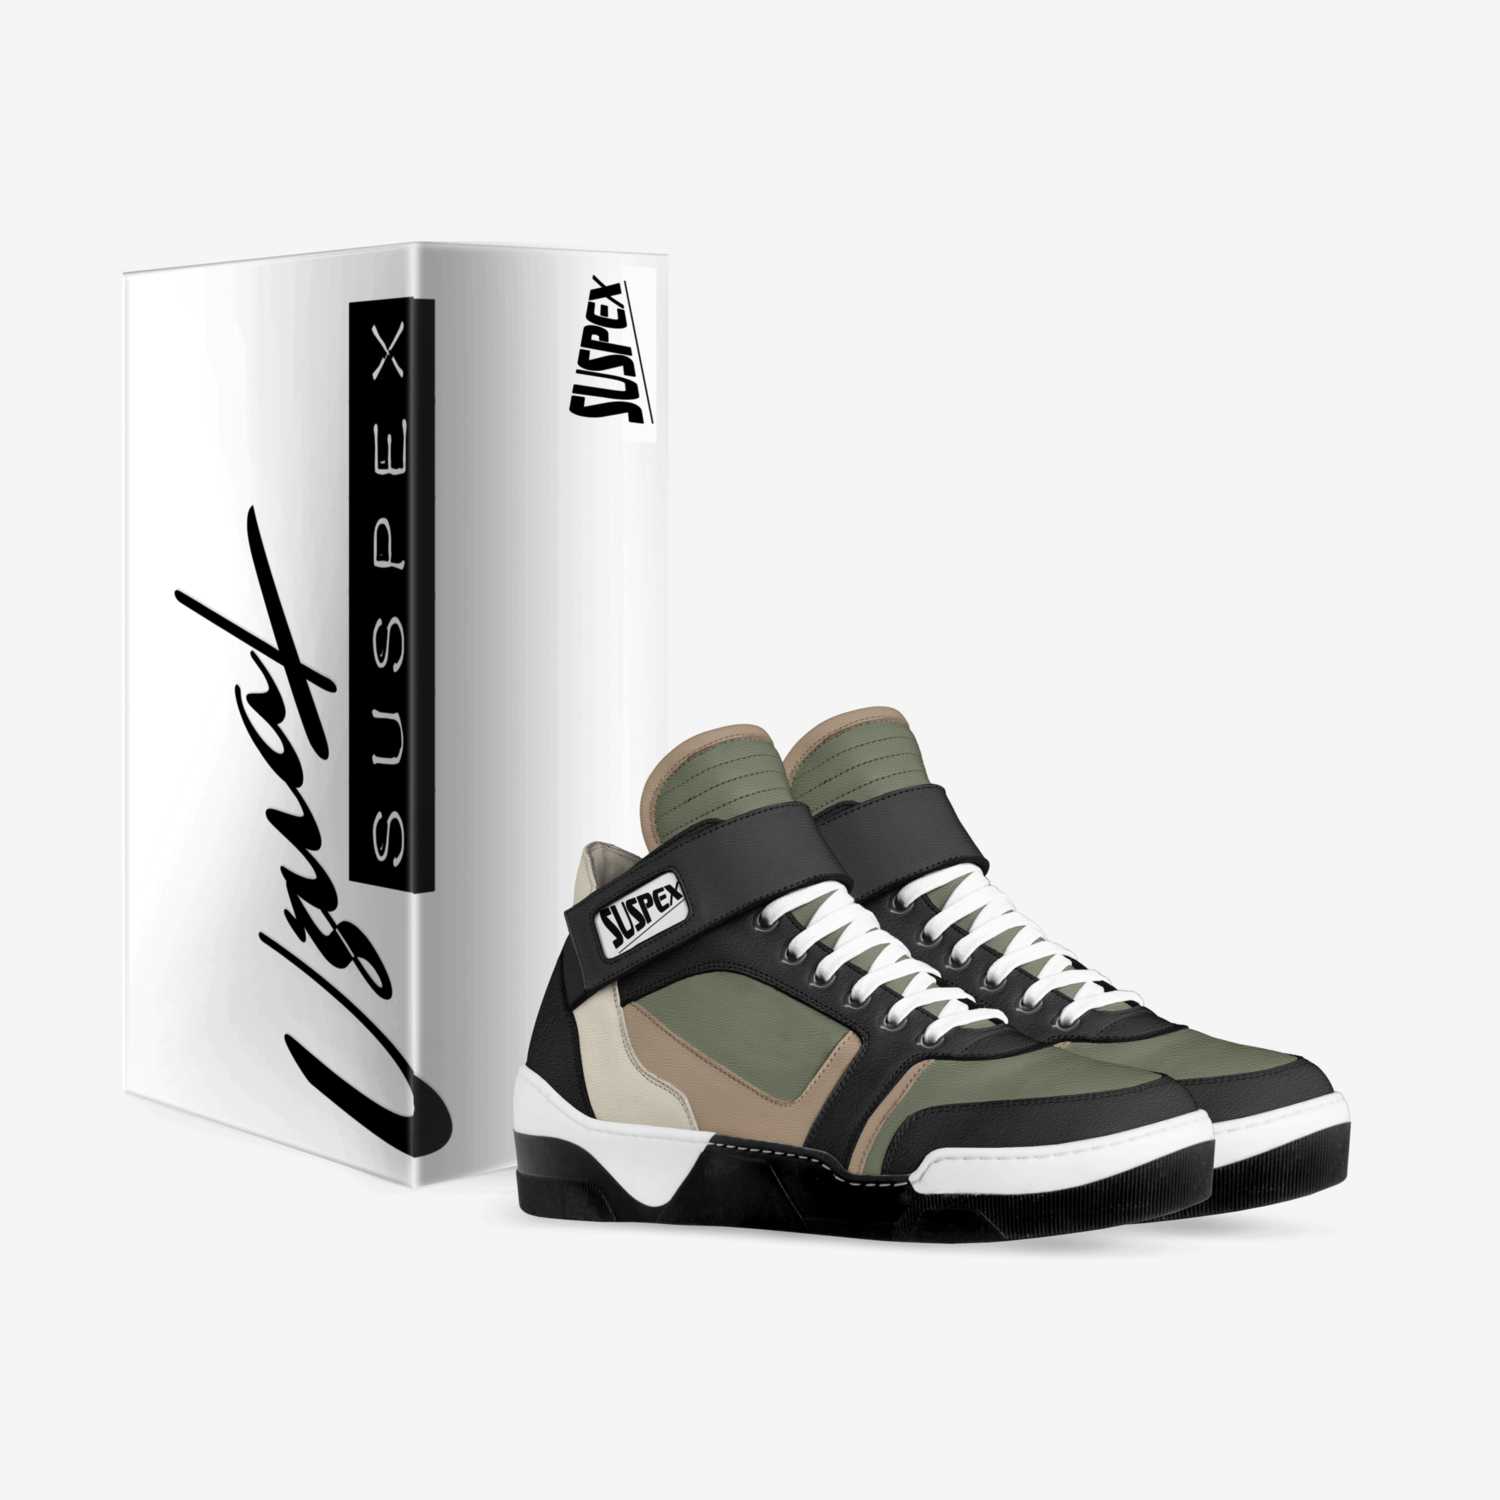 UzuaL SuSpeX custom made in Italy shoes by Sammy Soho | Box view